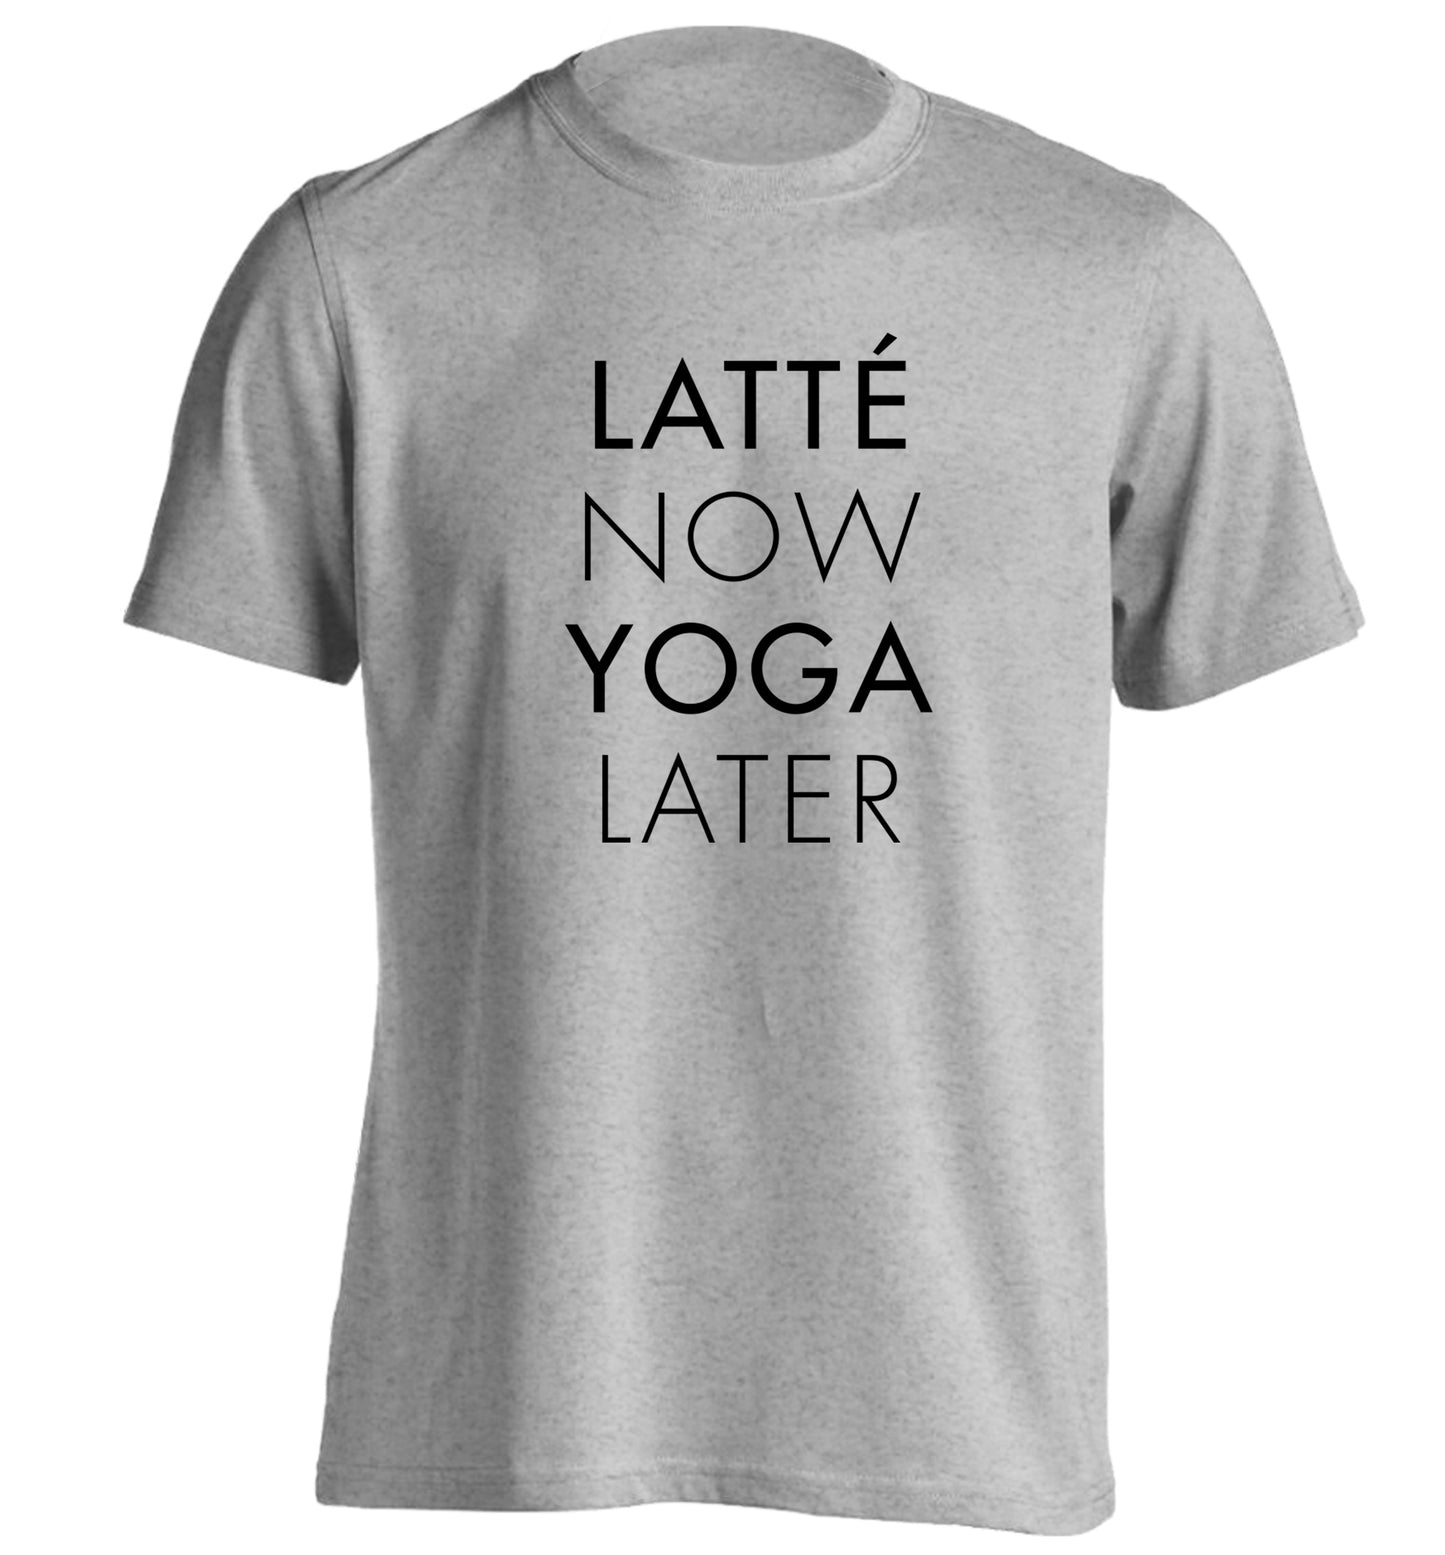 Latte now yoga later adults unisex grey Tshirt 2XL